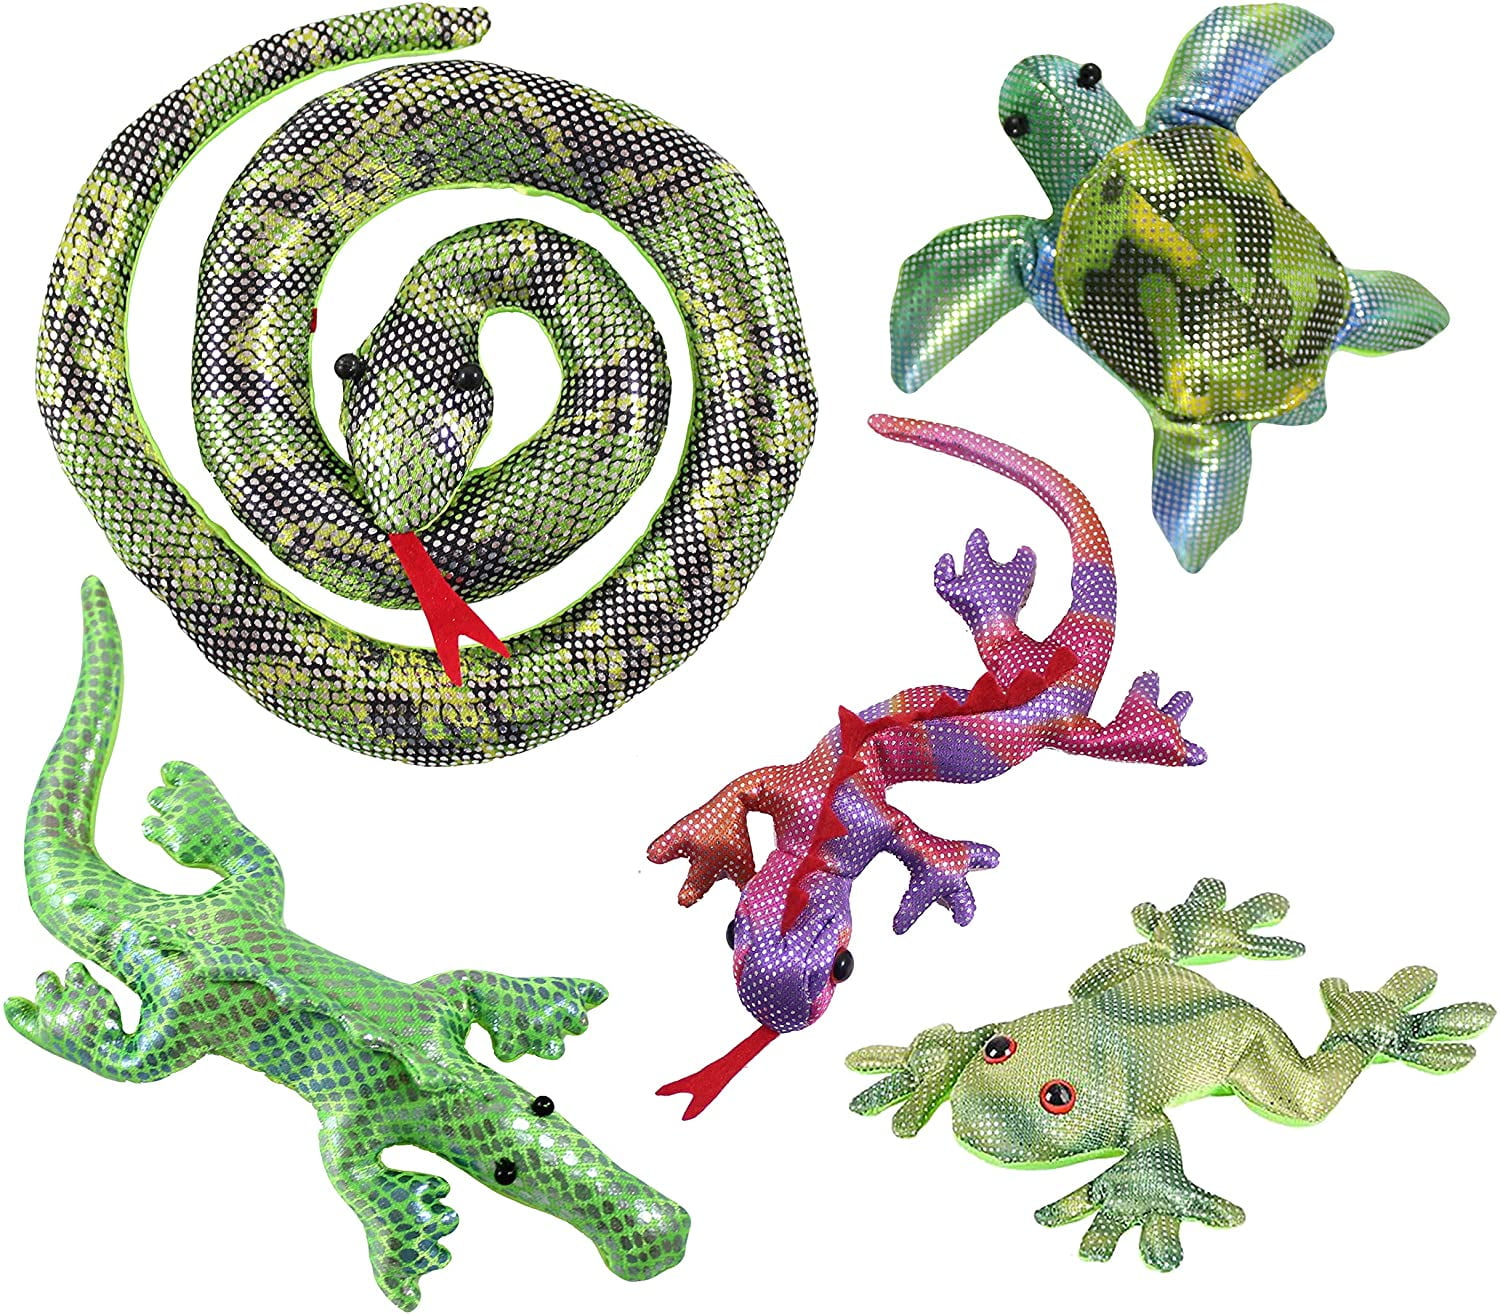 Sand Critter Beanie Toy Snap on Bracelet Green Purple Blue Frog Gpb1 for sale online 